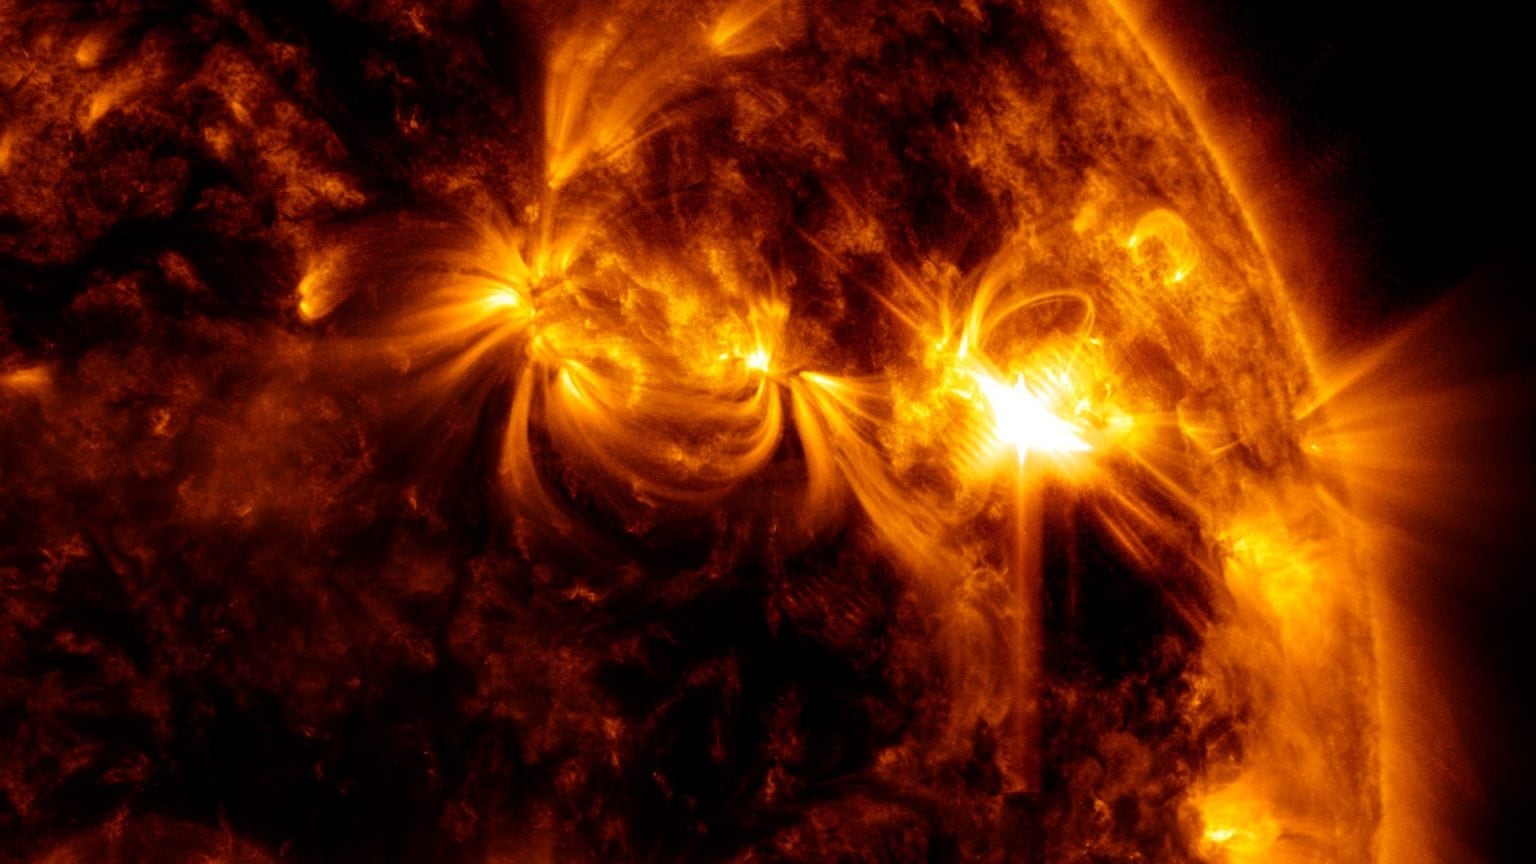 Sunspot ready to explode, may send solar flares Earthward, spark